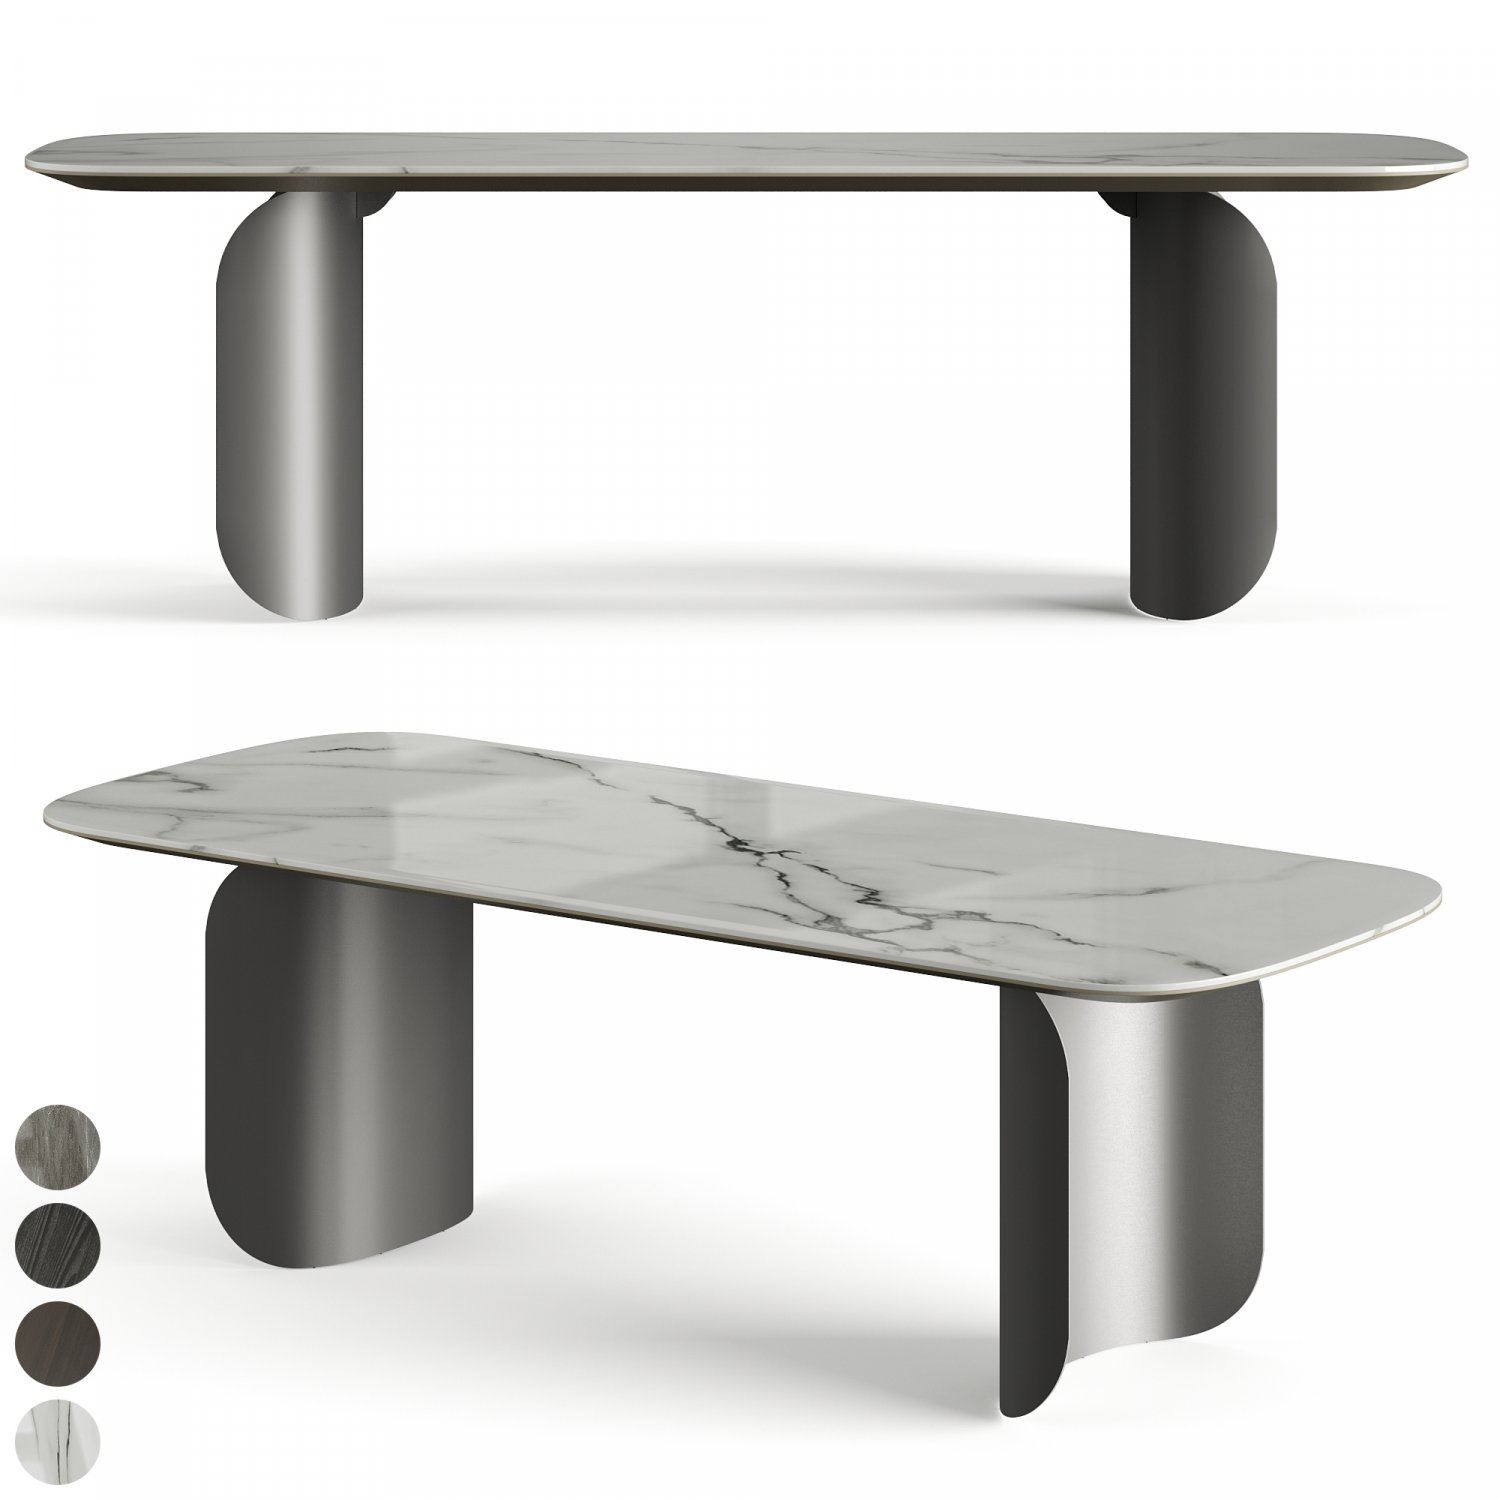 Миниформ. Barry Tables by Miniforms. Миниформ складной стол. Miniforms. Table render.